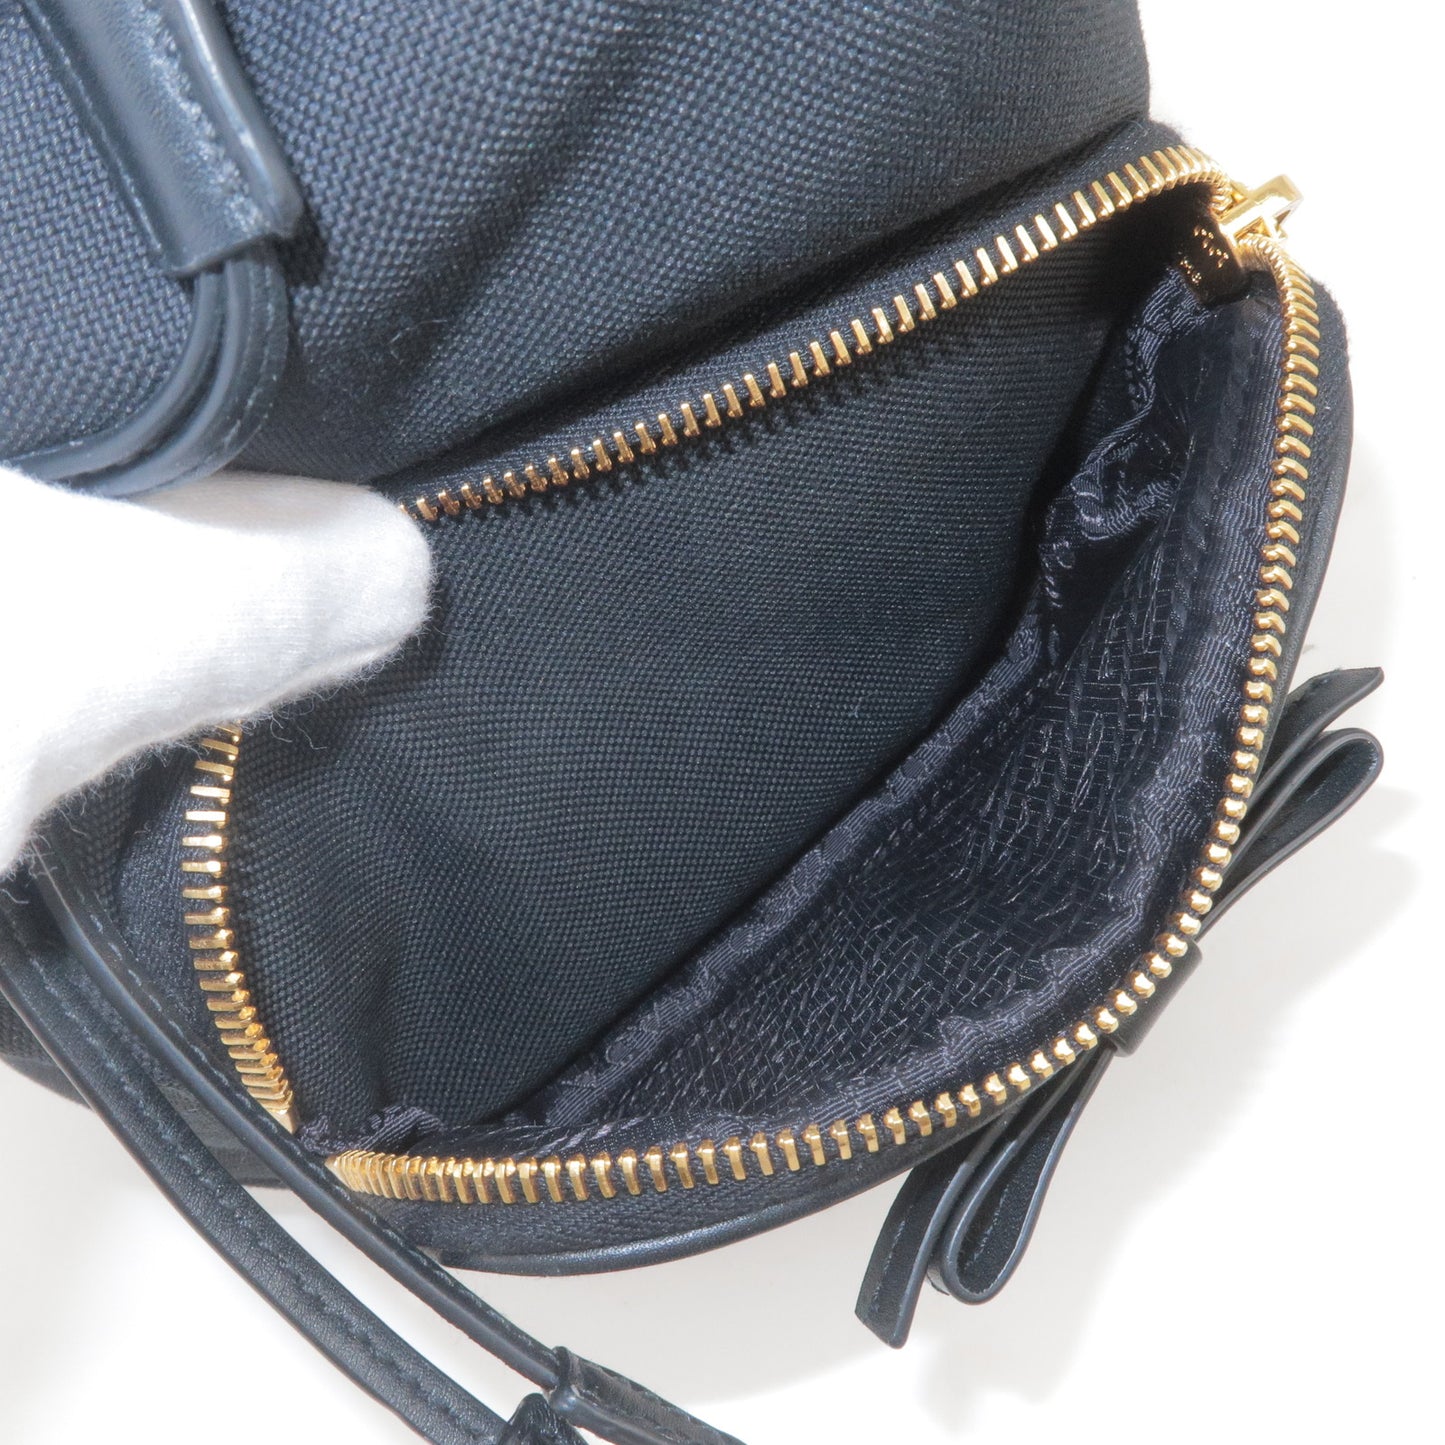 PRADA Logo Jacquard Leather 2Way Bag Hand Bag Black 1BH038